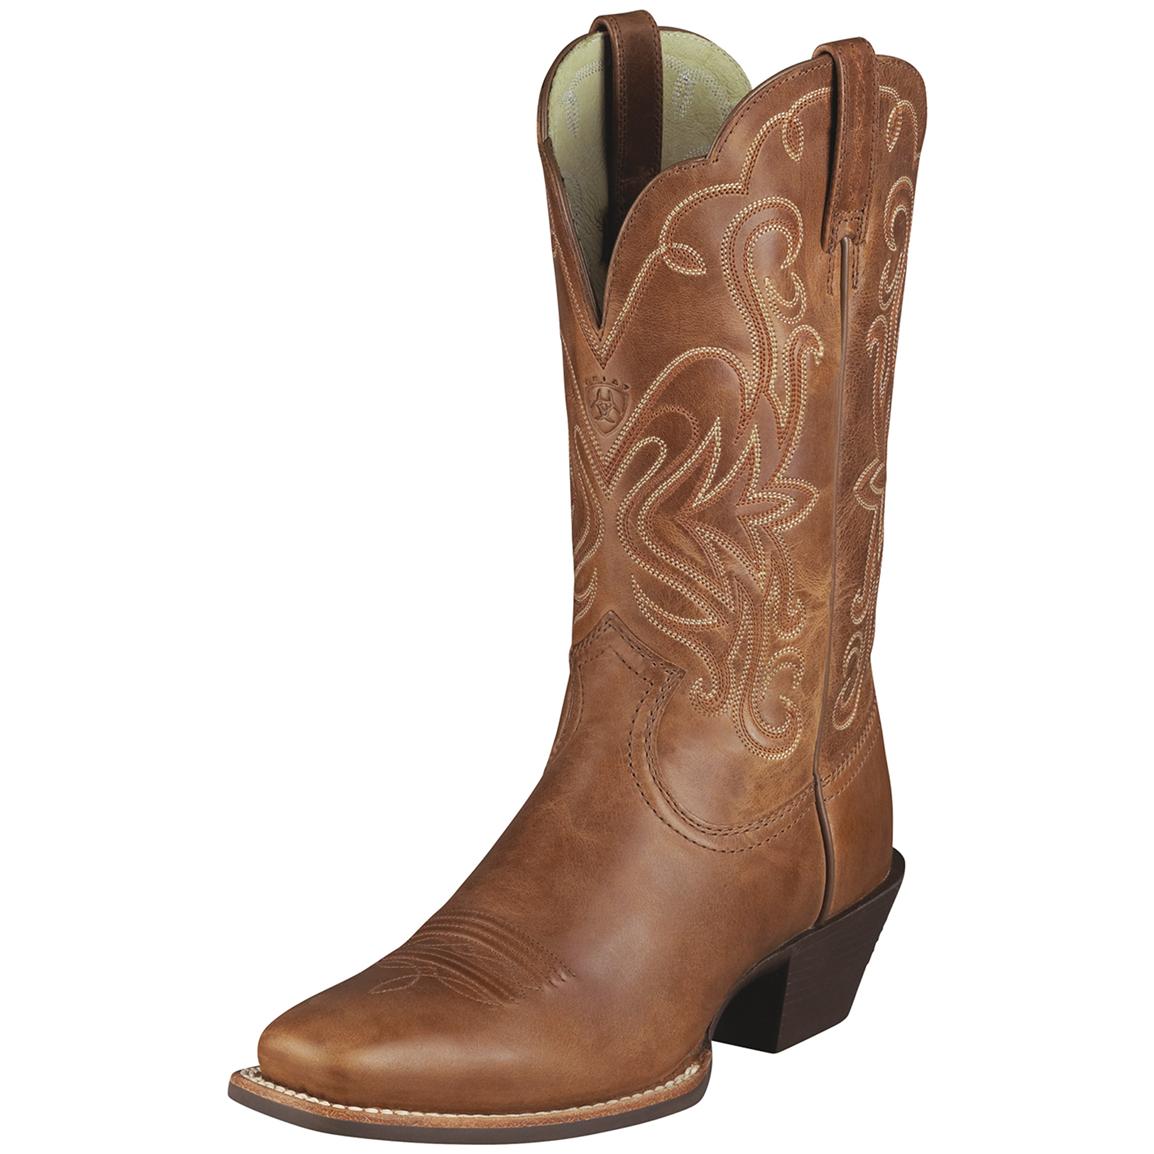 Appealing western boots for women